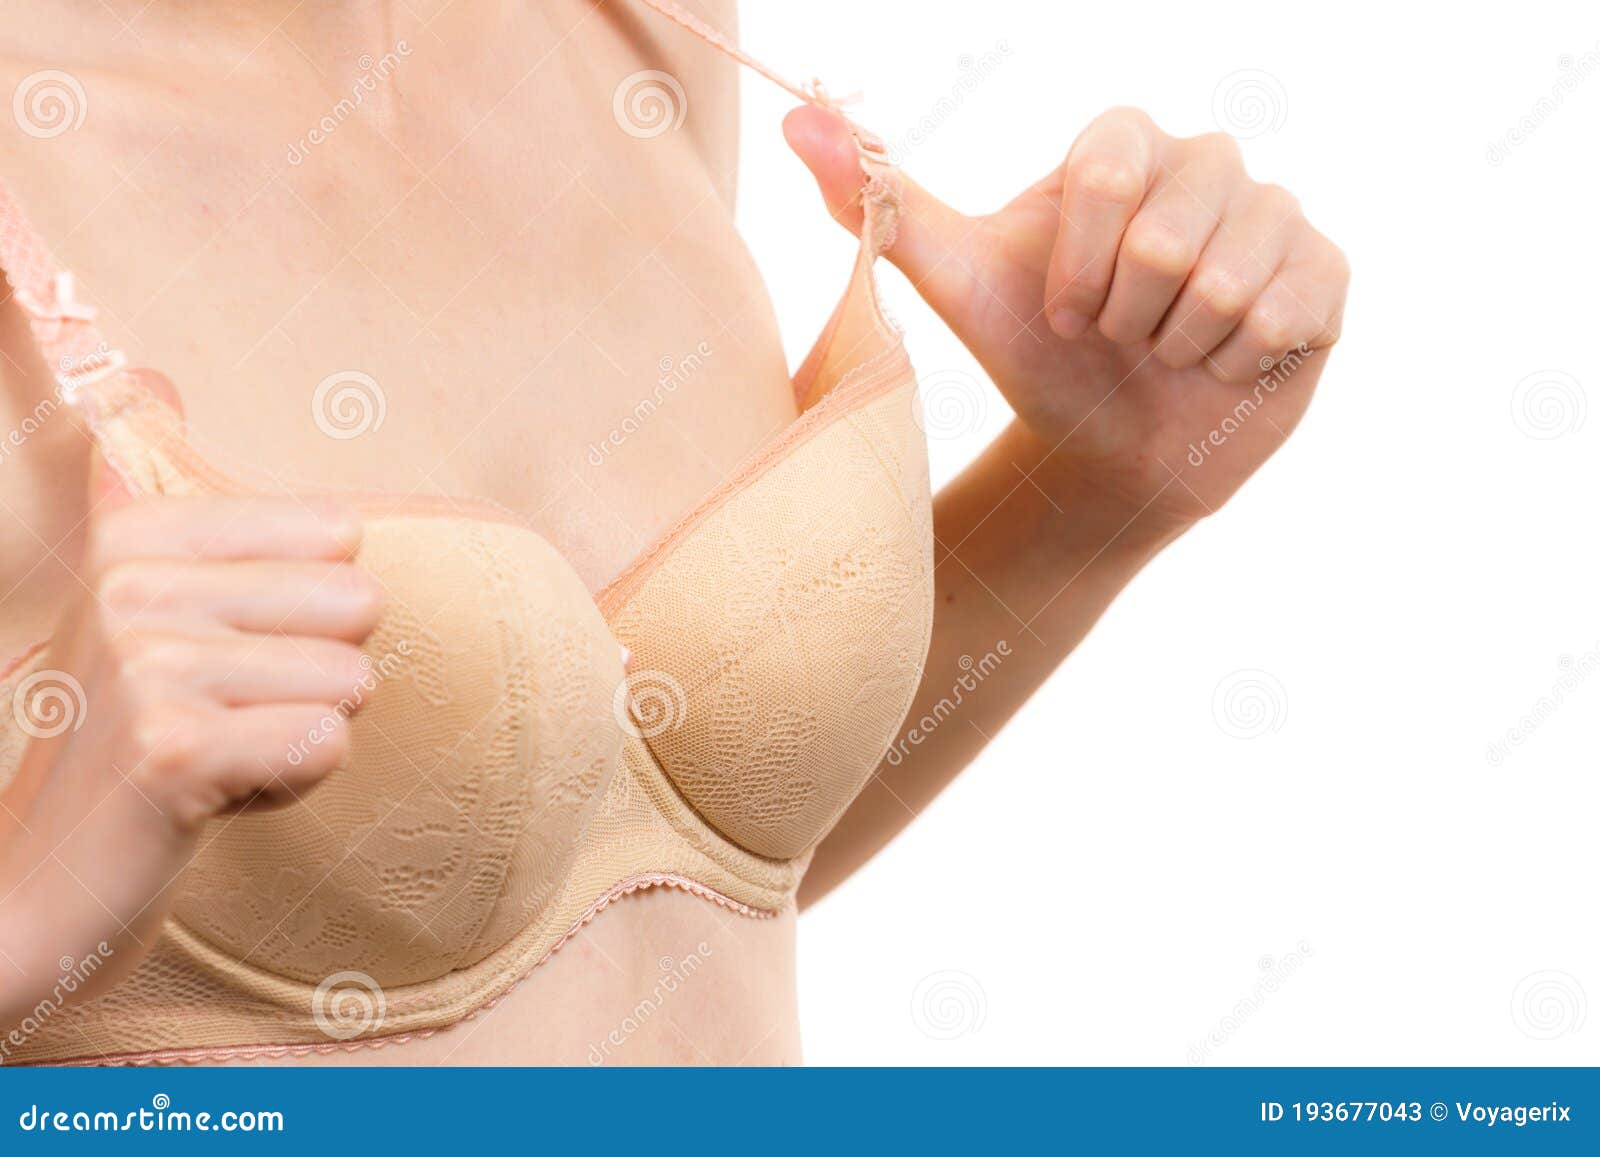 64,806 Female Breast Stock Photos - Free & Royalty-Free Stock